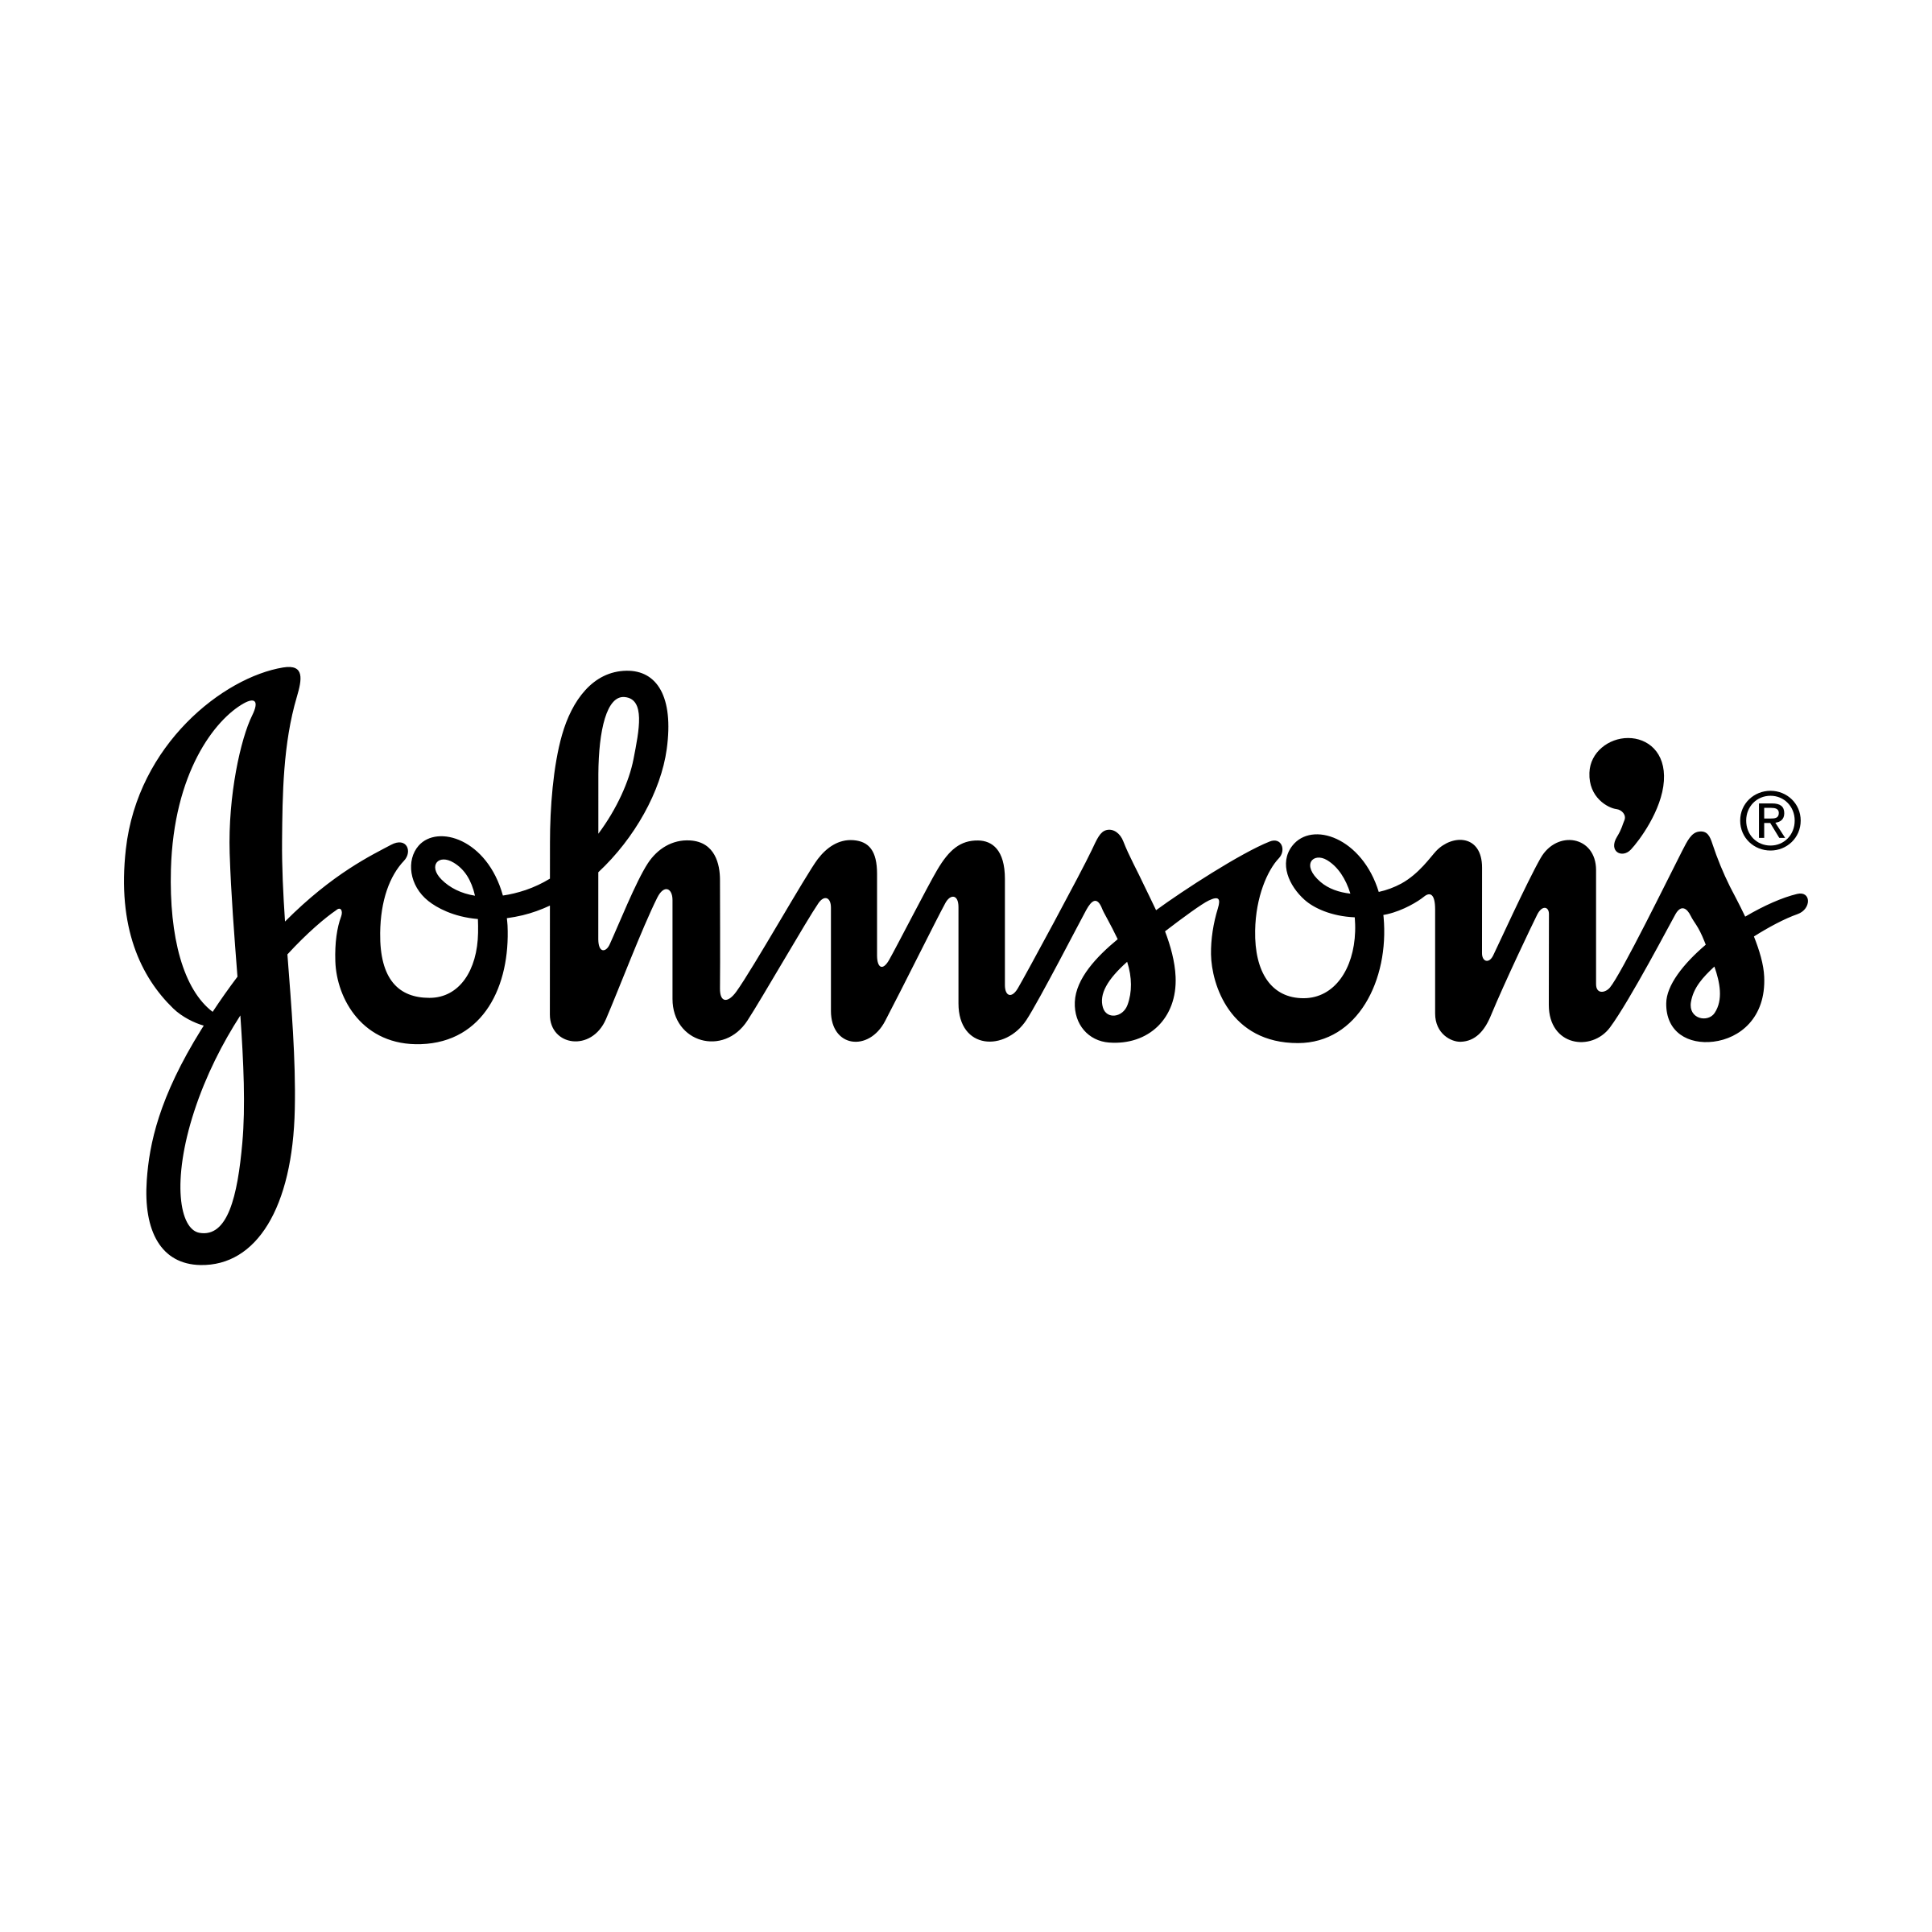 Hohnson Logo - Johnson's Logo PNG Transparent & SVG Vector